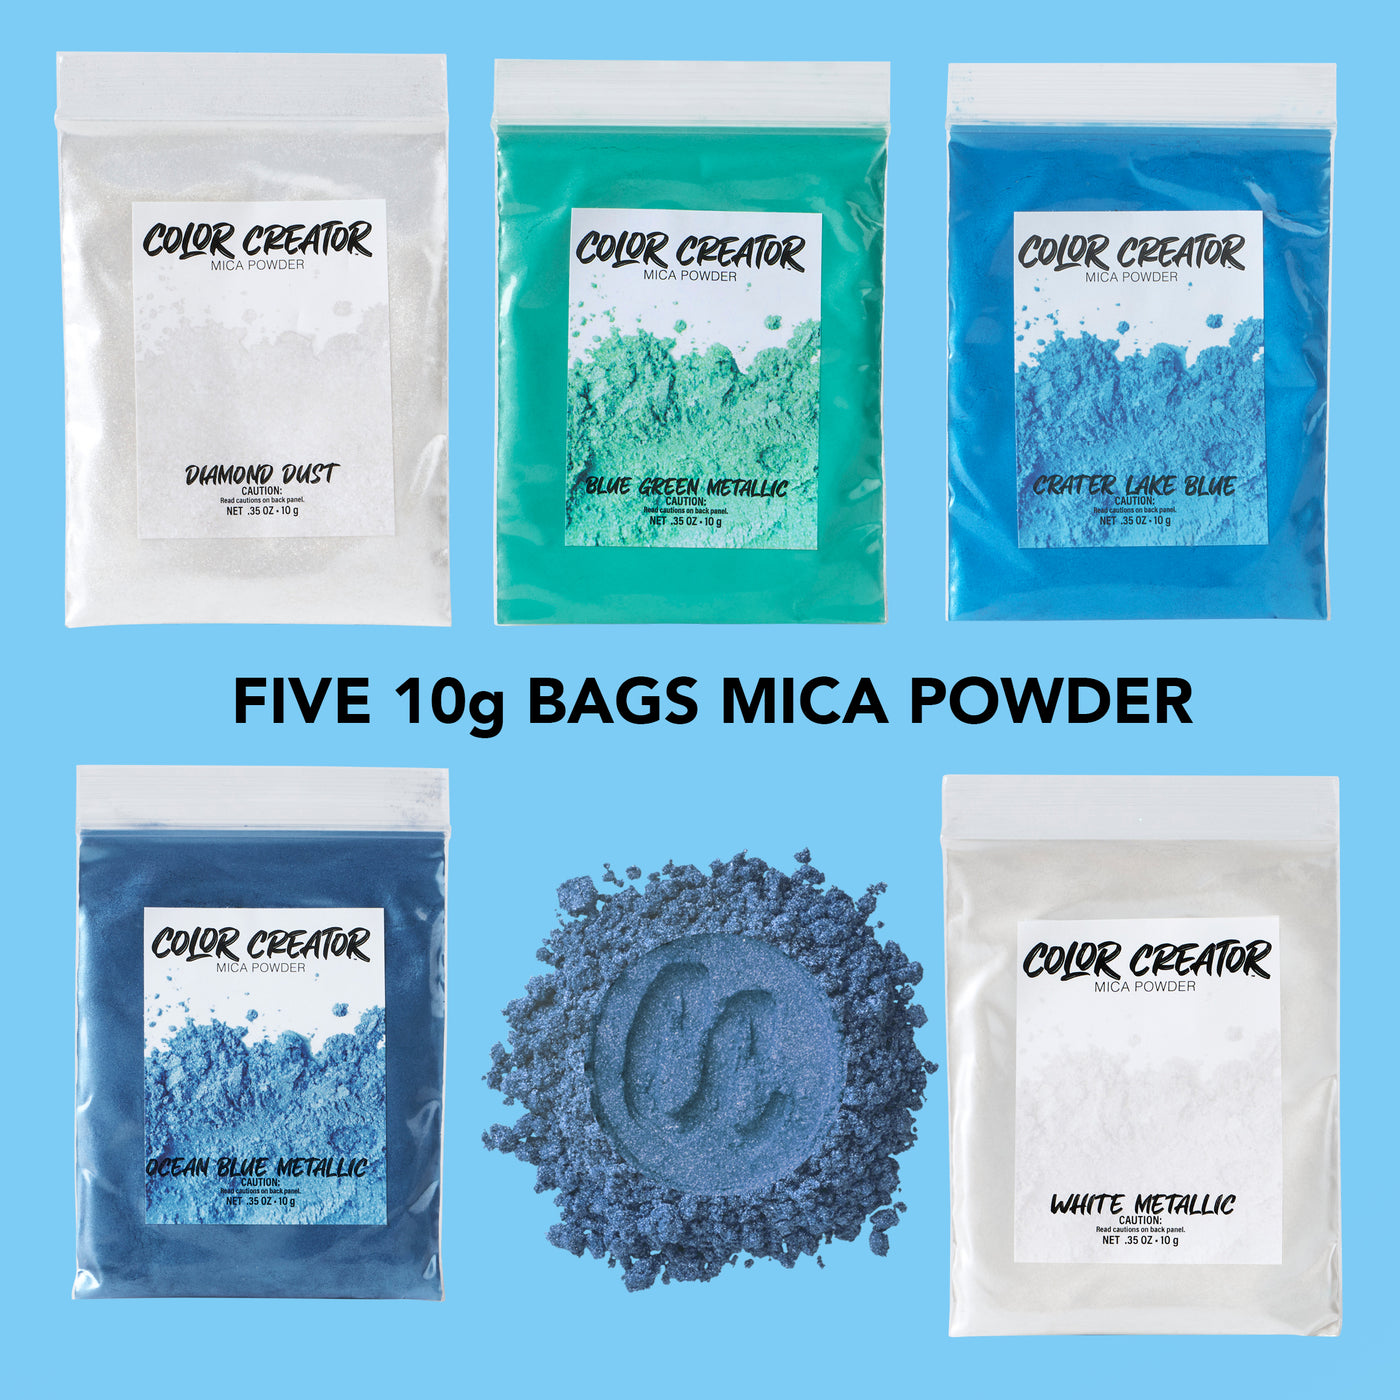 Color Creator Pacific Ocean 12 Pack Mica Powders Alcohol Inks